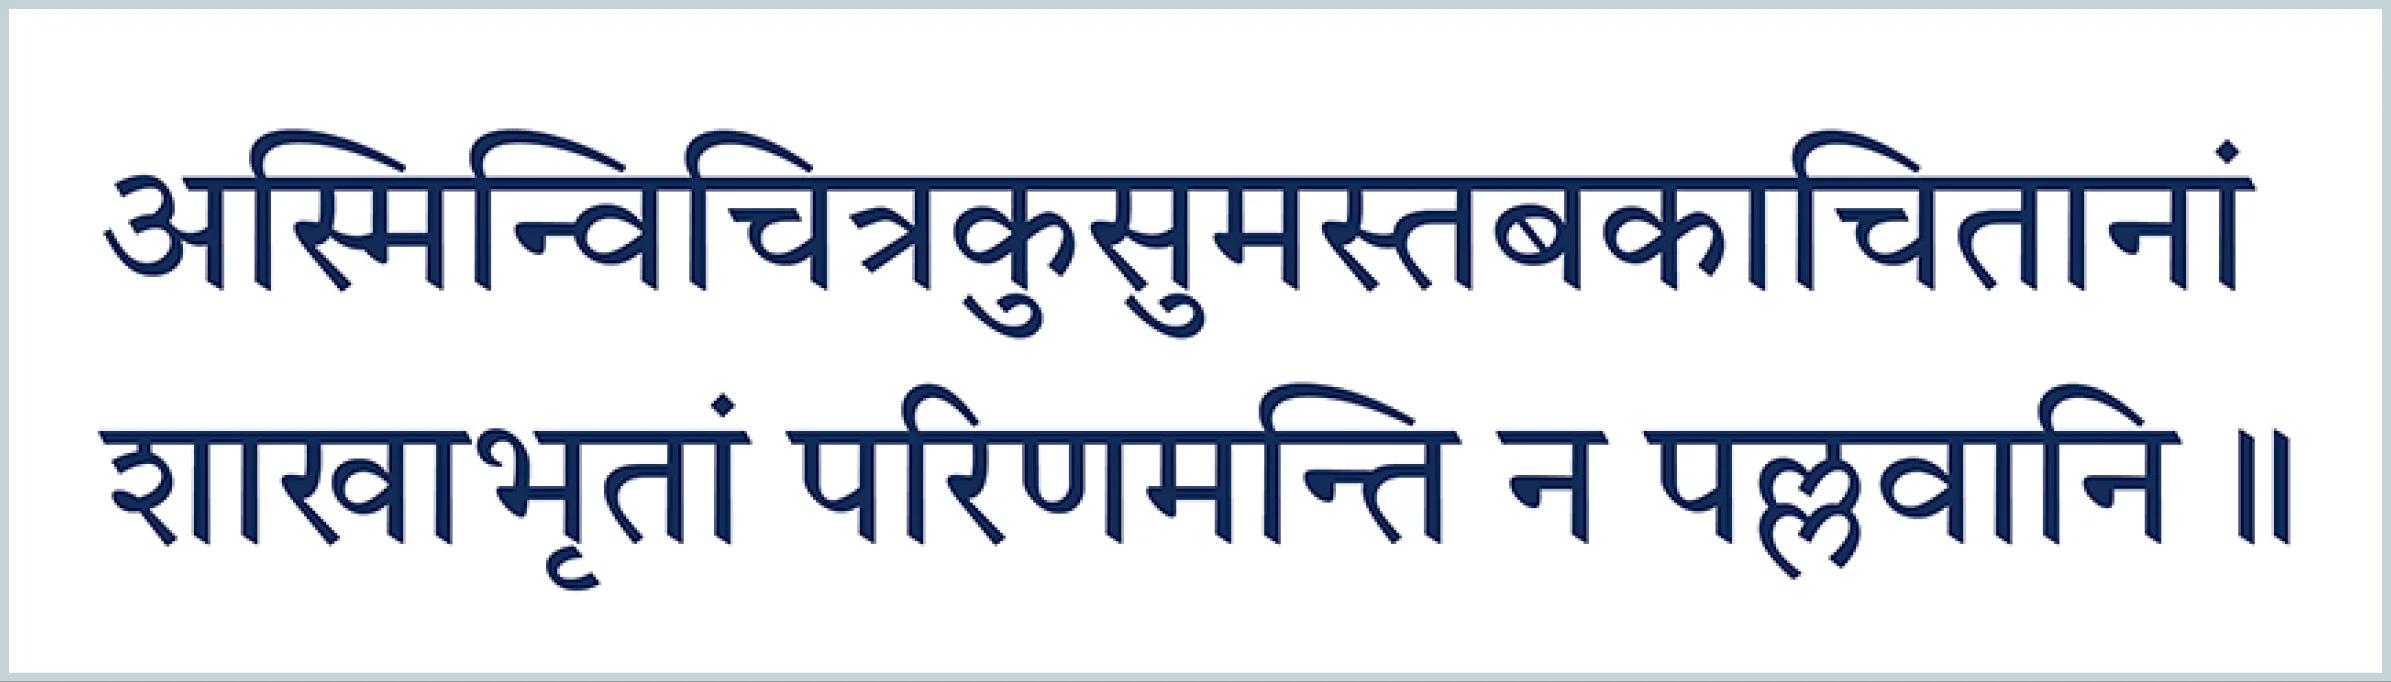 Two lines of Sanskrit poetry